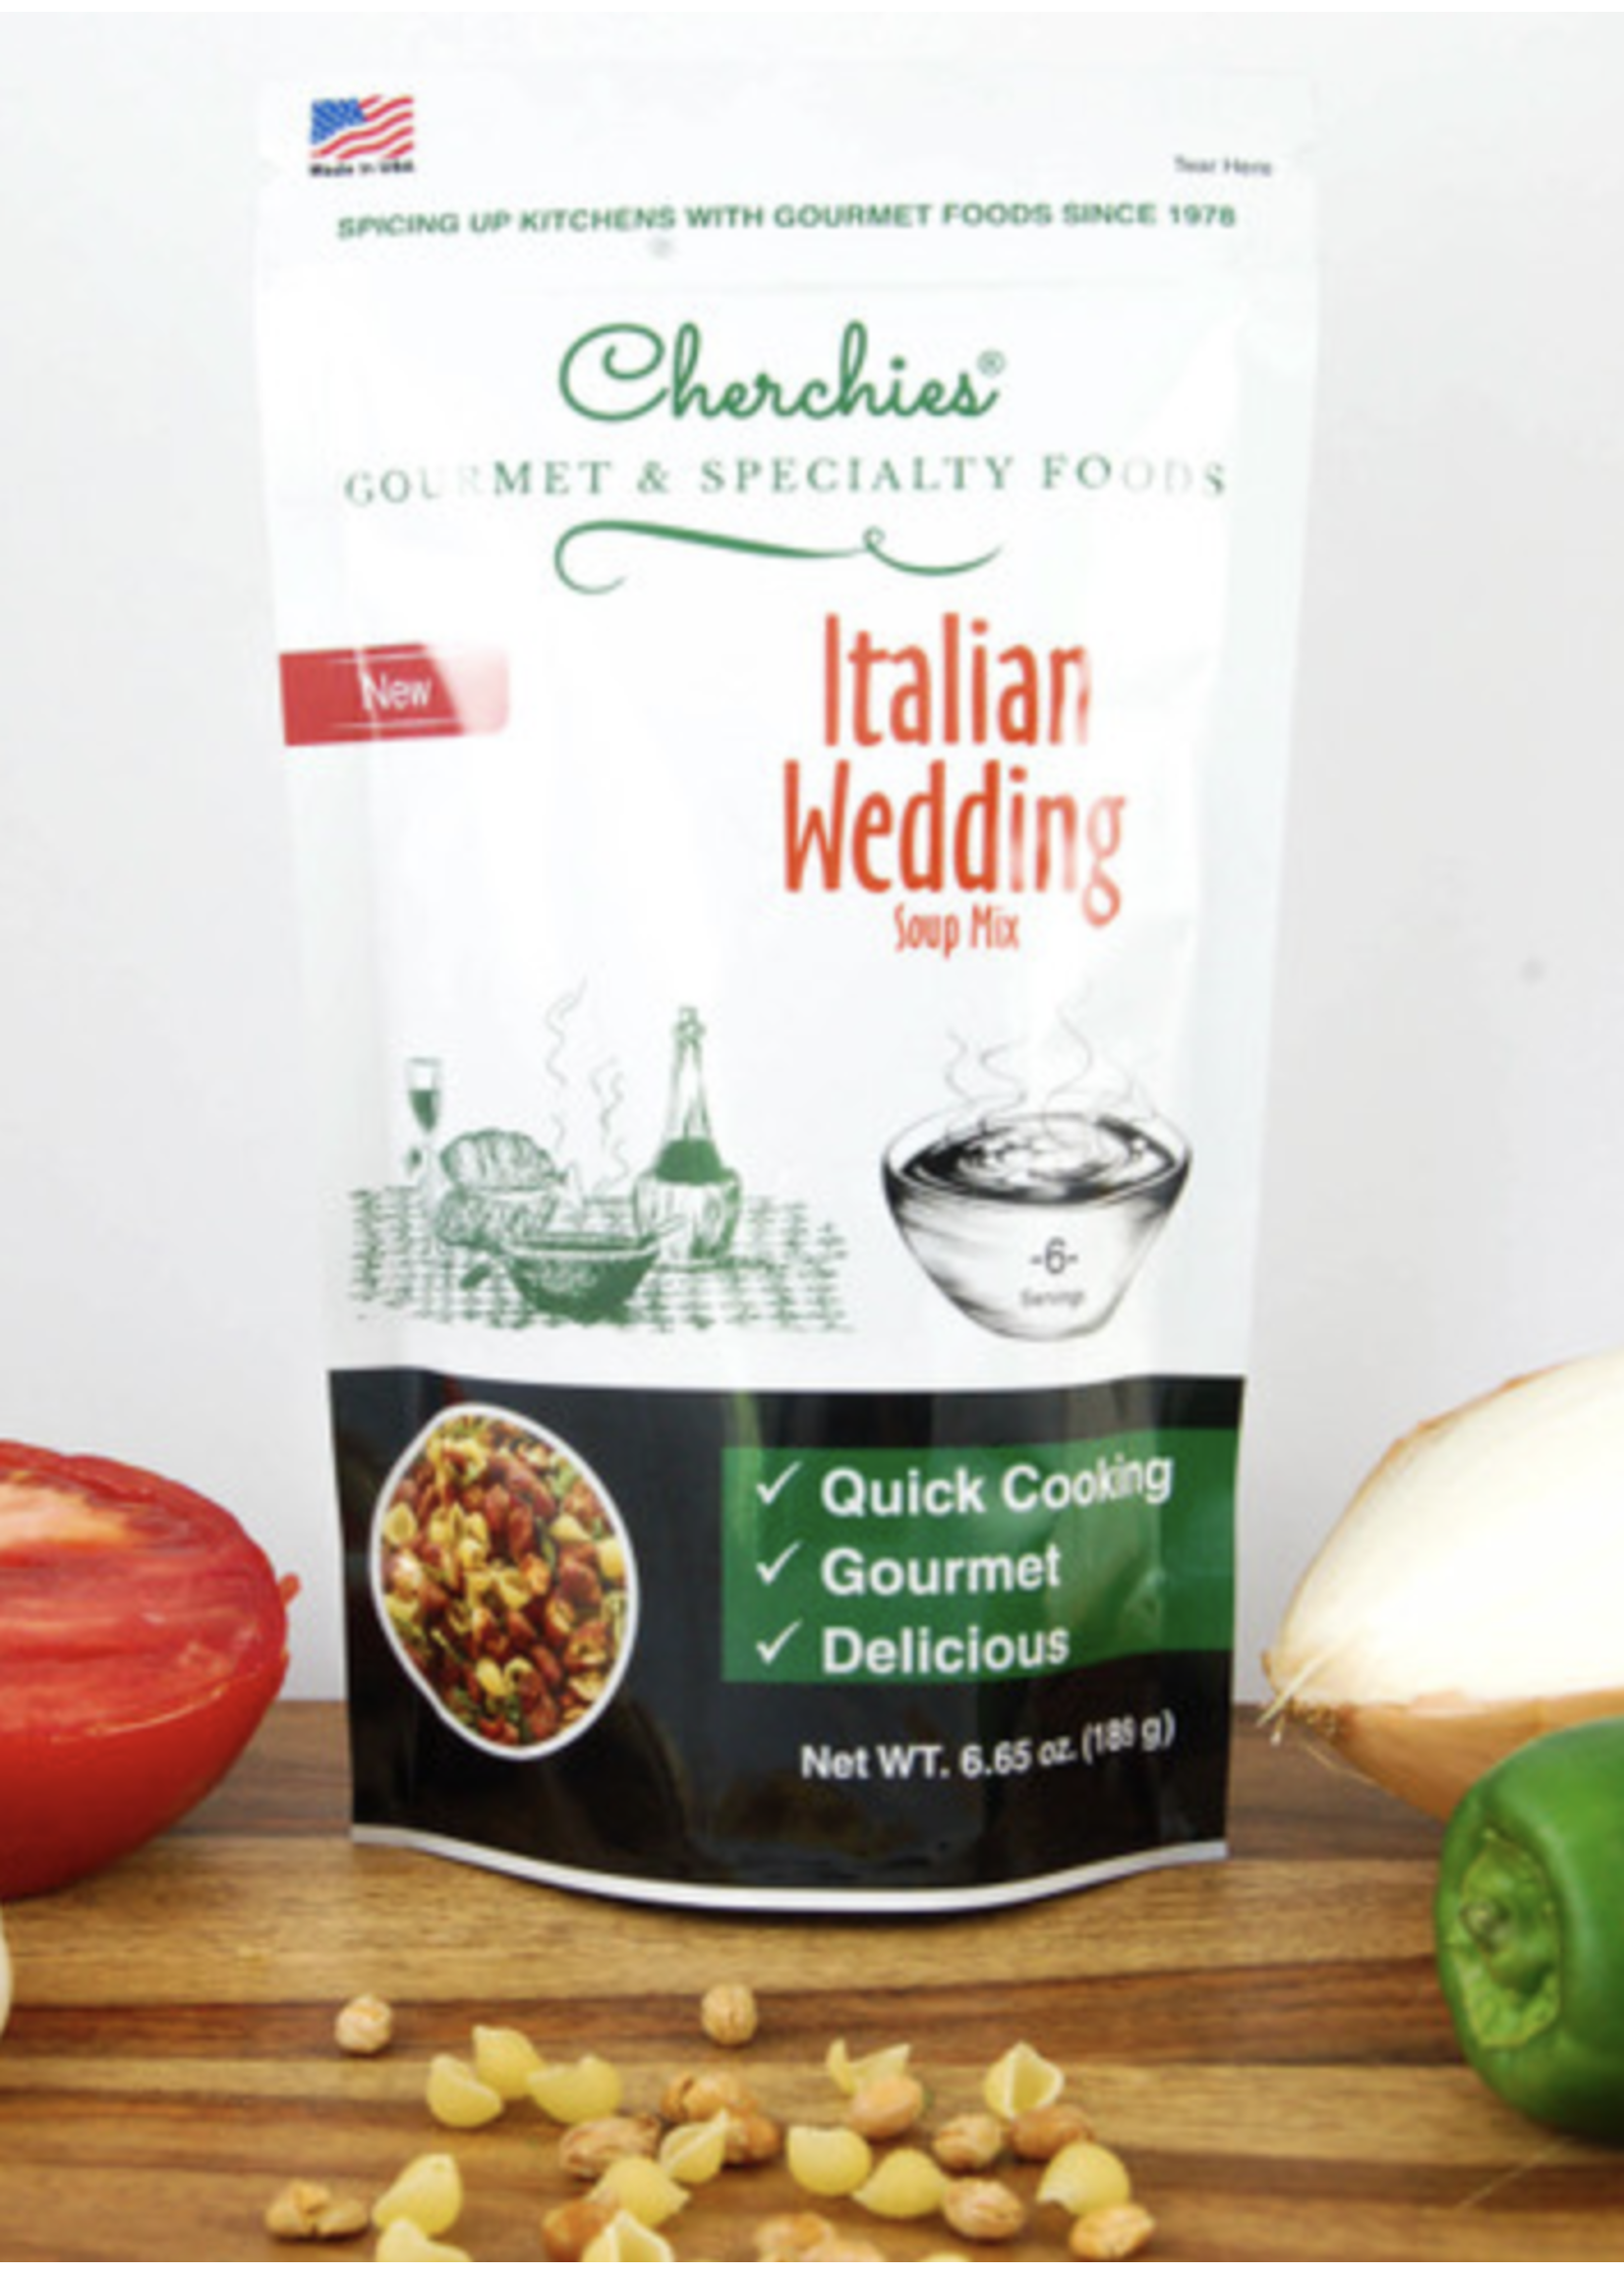 Cherchie's Italian Wedding Soup Mix